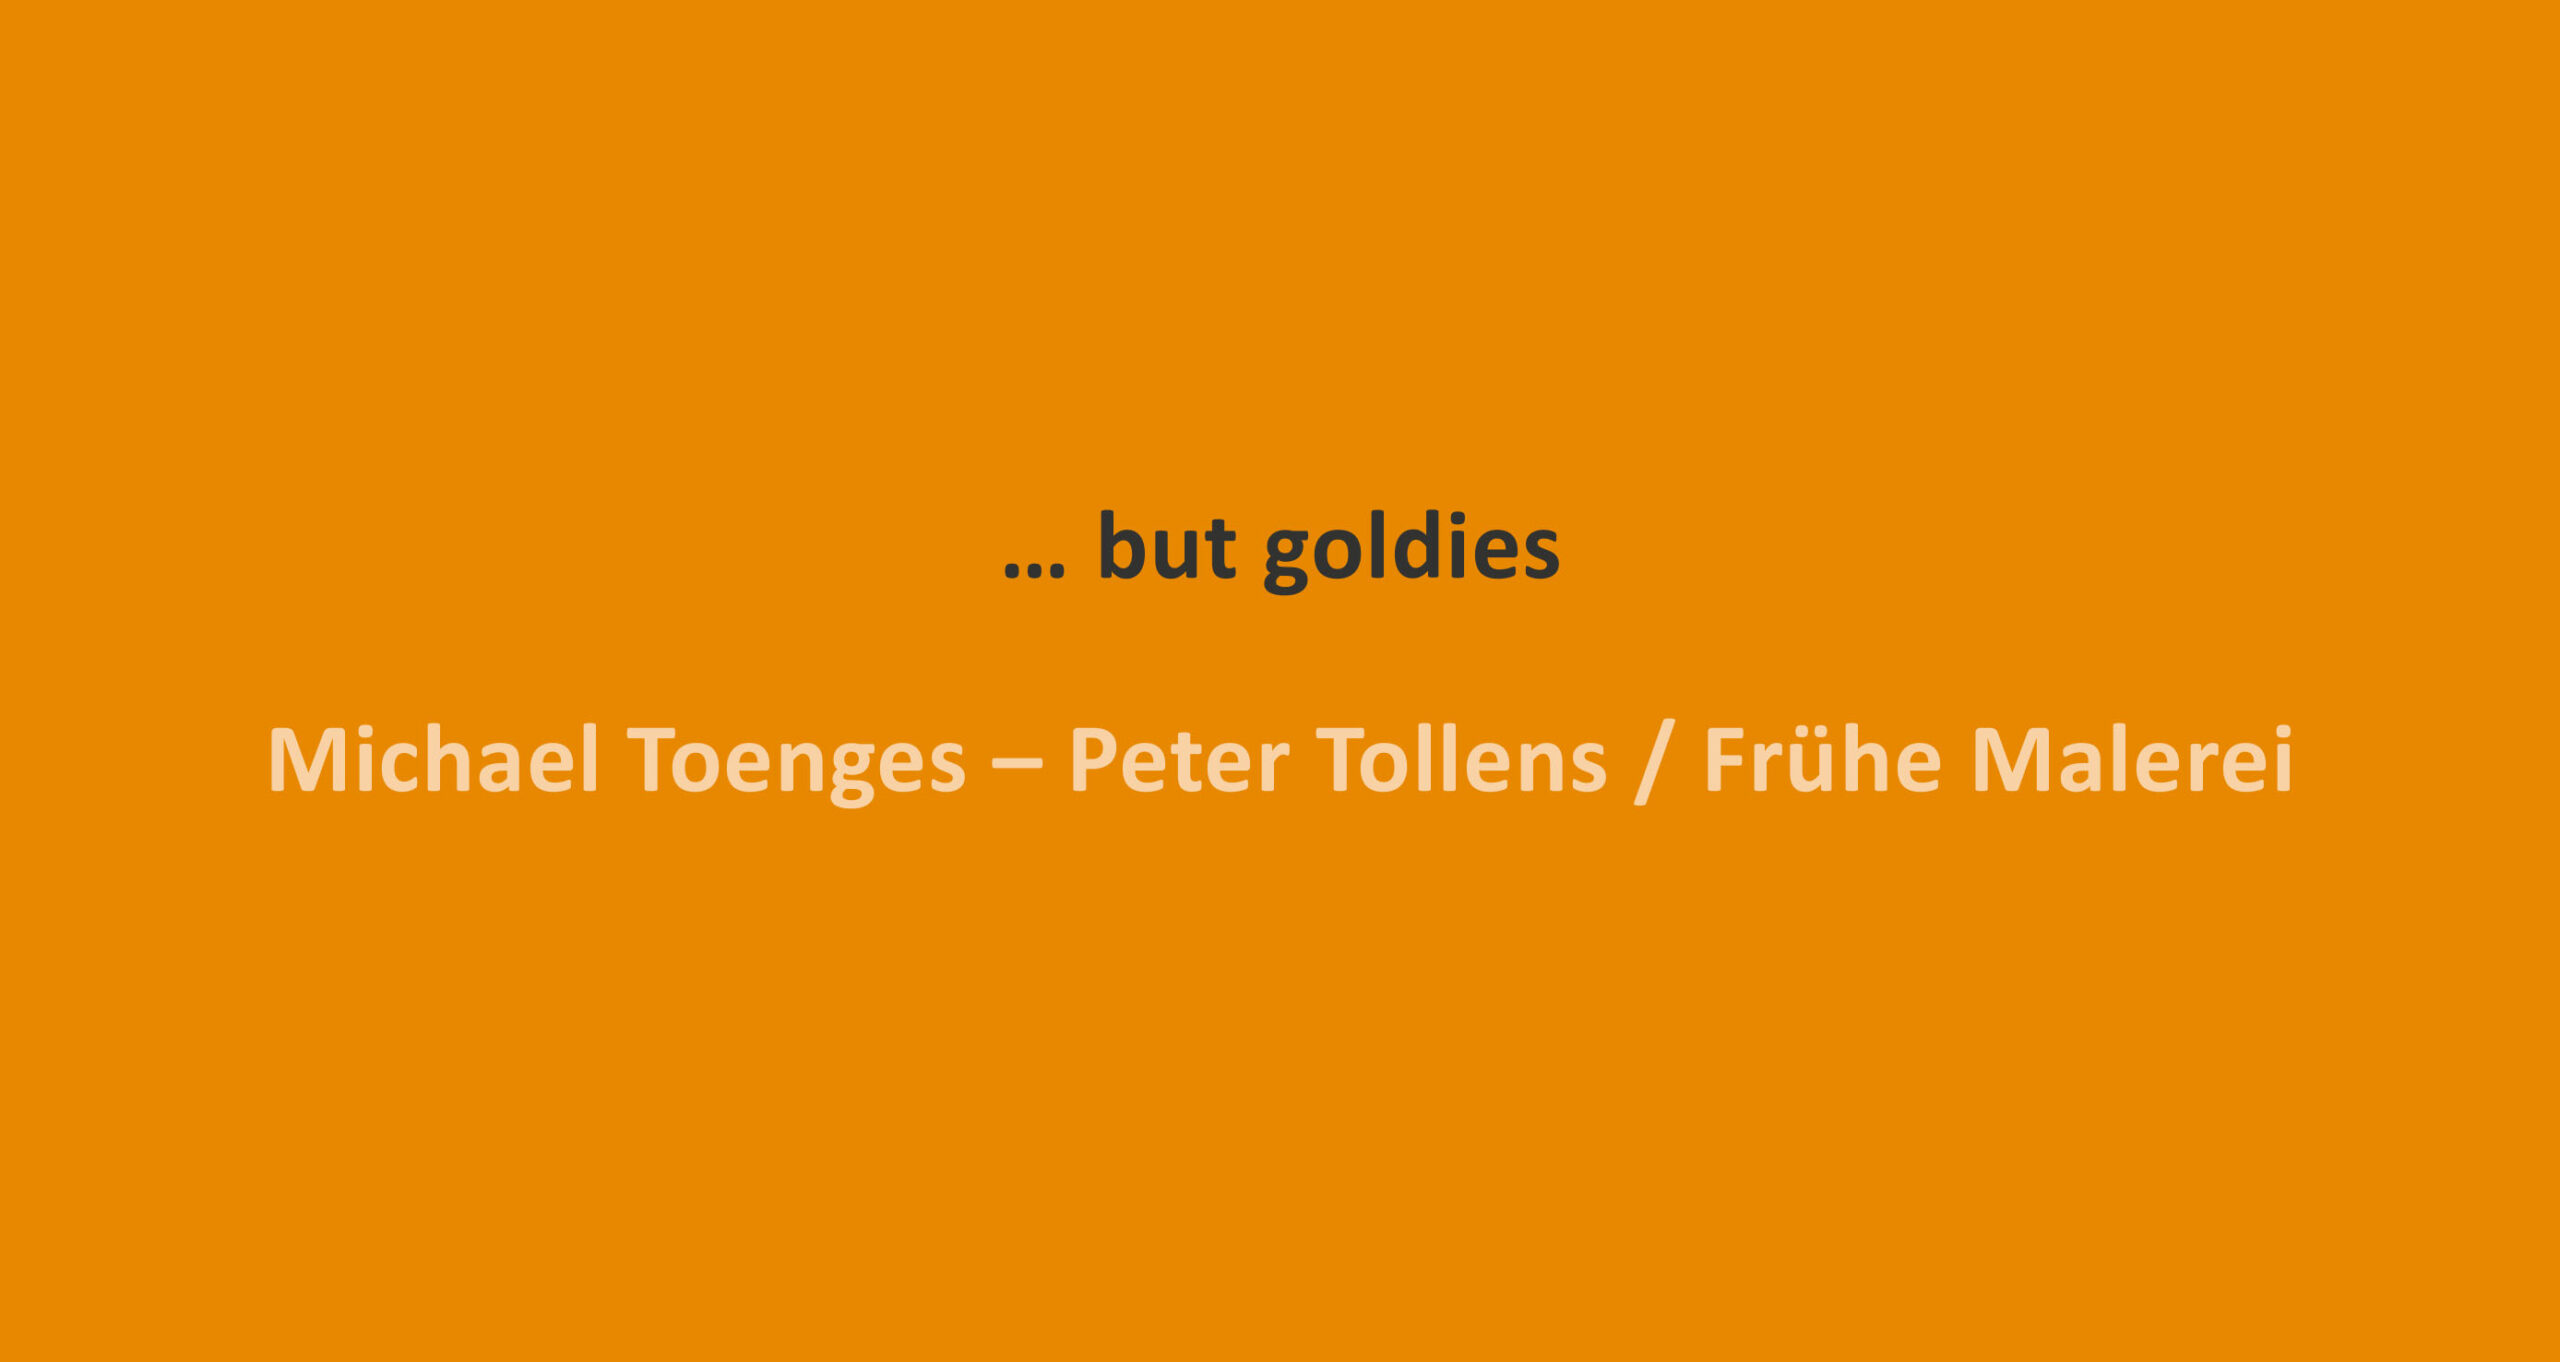 … but goldies. Michael Toenges – Peter Tollens / Frühe Malerei